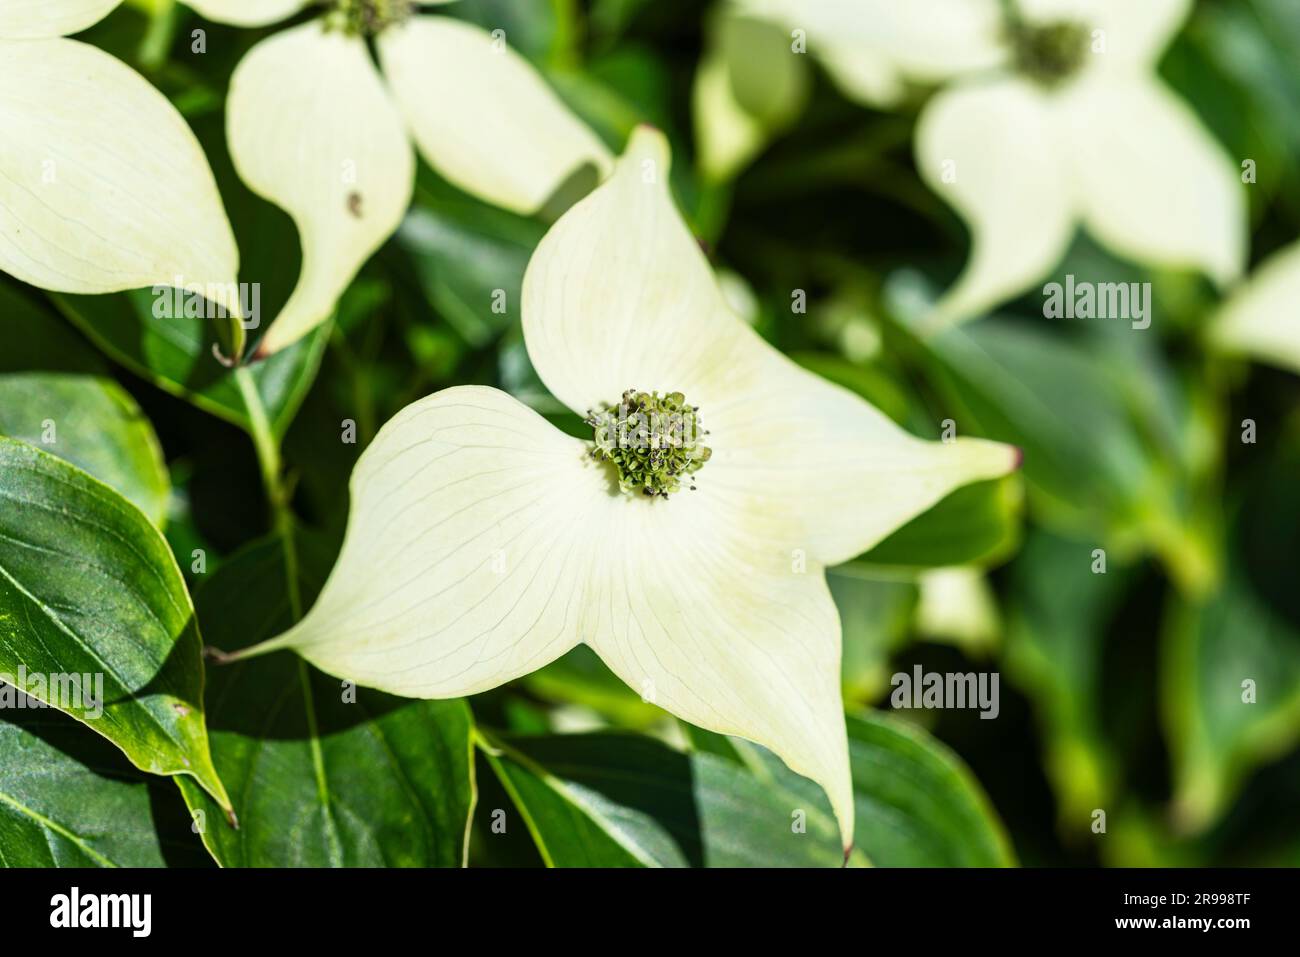 Cream-coloured petals with inflorescence of an Asian flowering dogwood Cornus kousa shrub blossom in sunlight Stock Photo